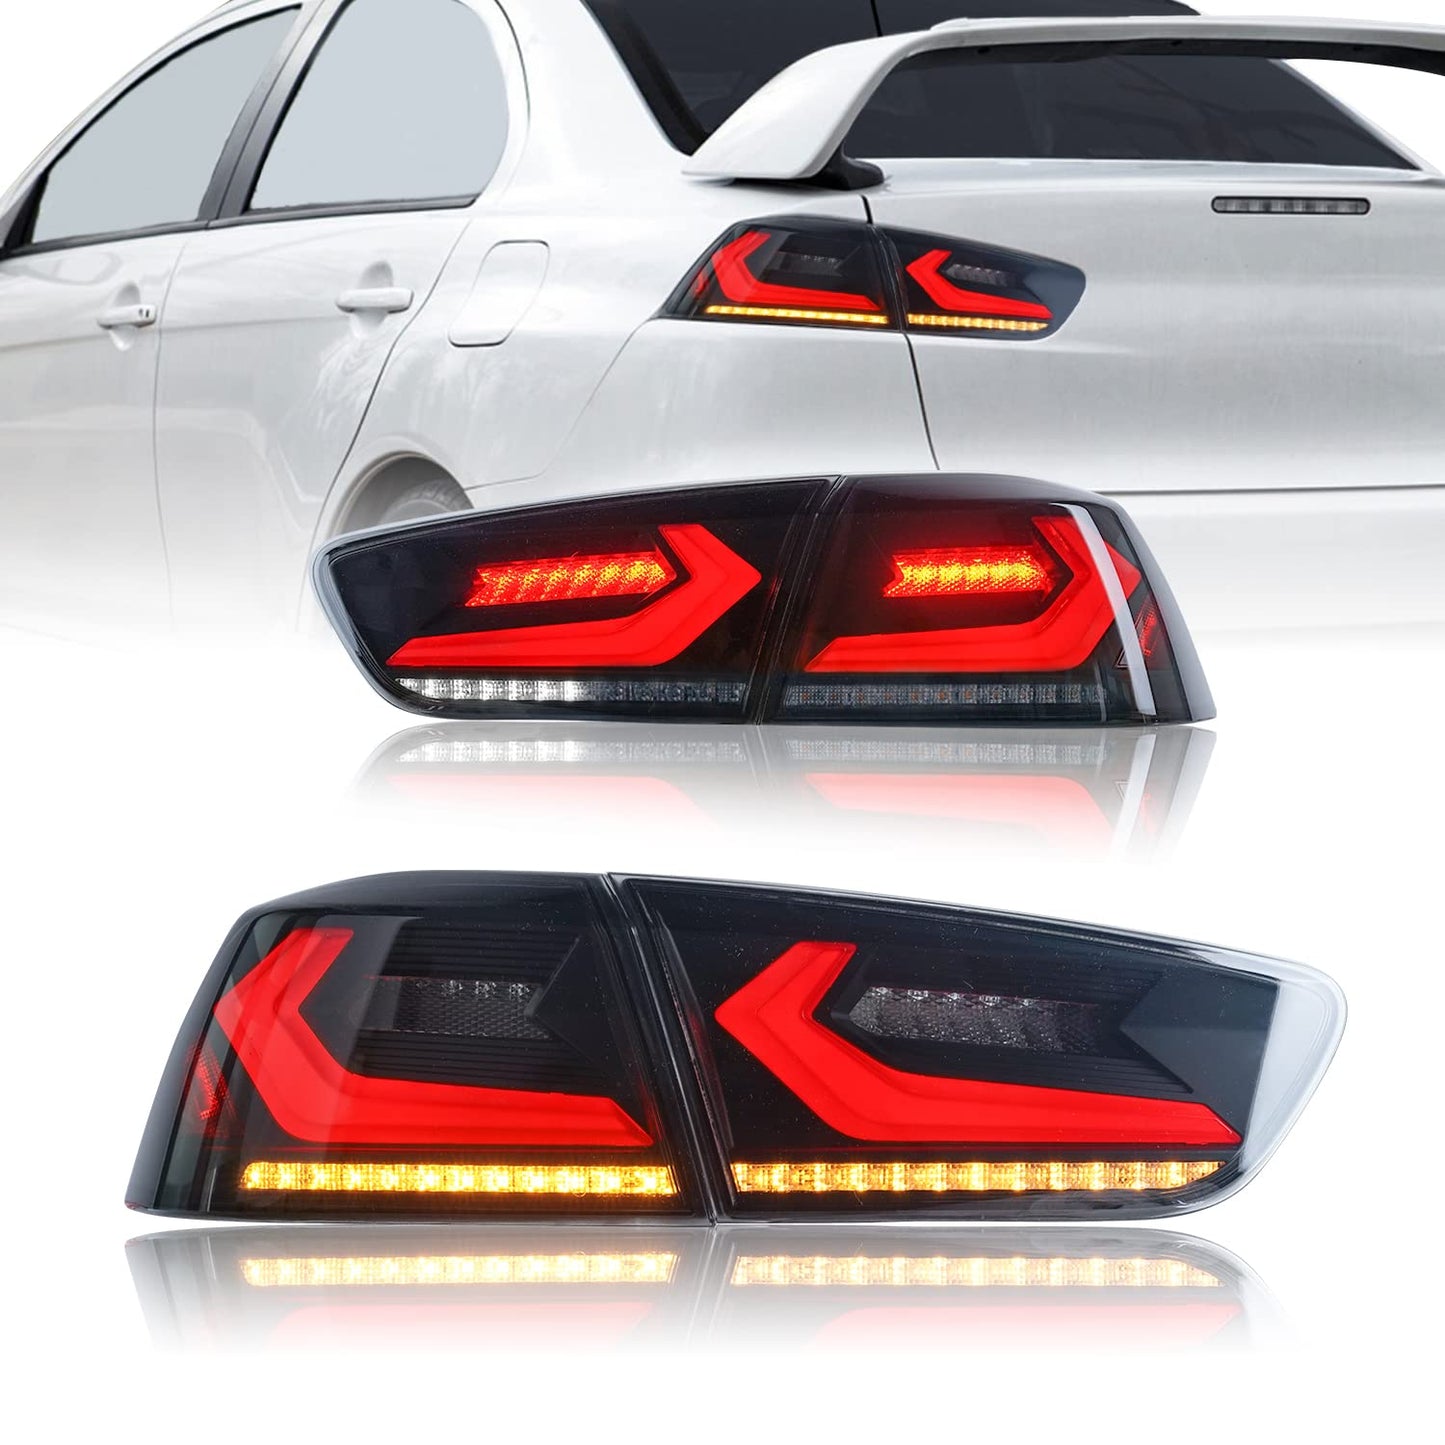 Full LED Tail Lights Assembly For Mitsubishi Lancer EVO X 2008-2020